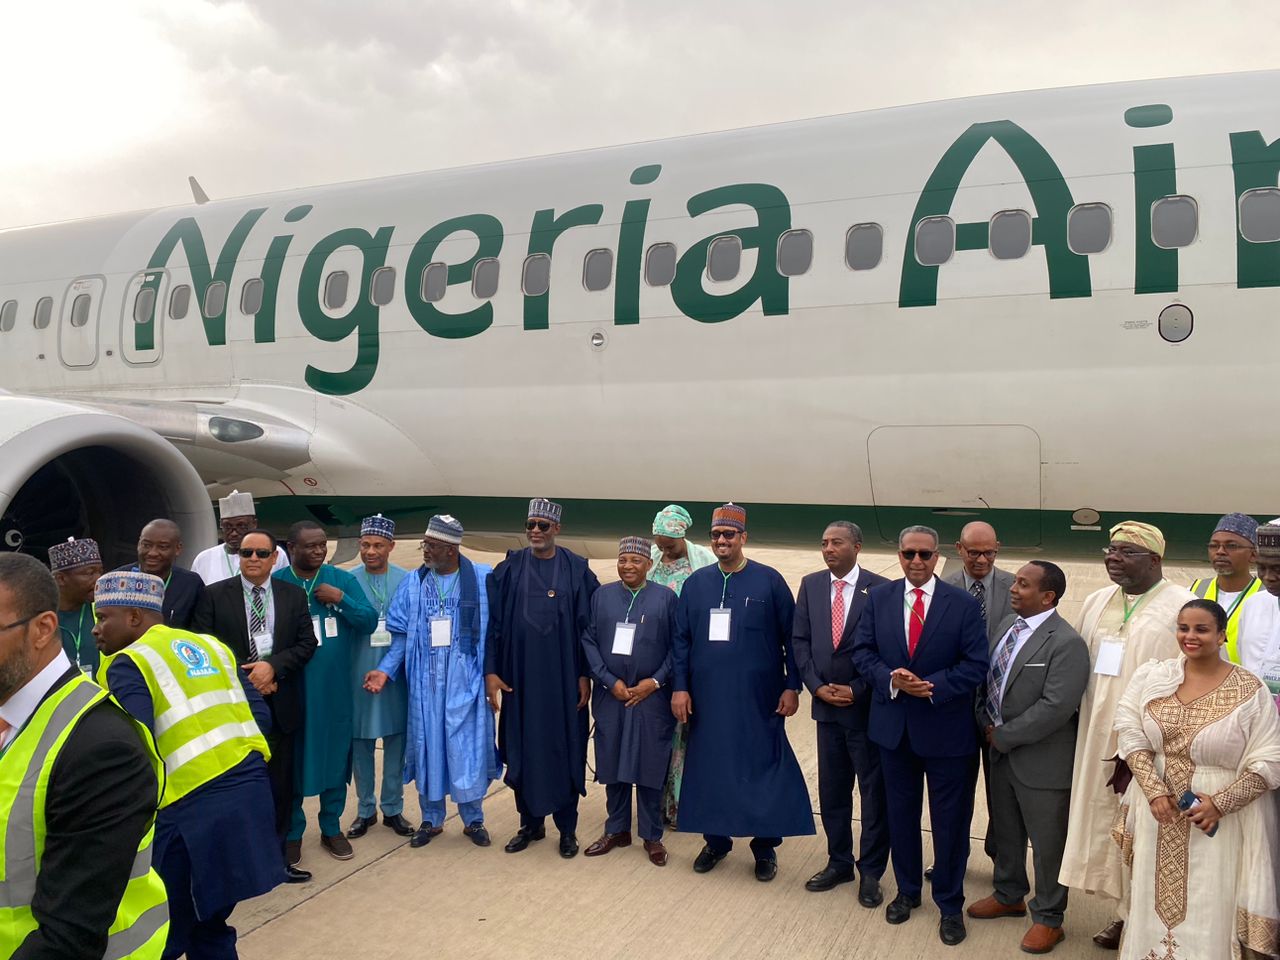 Nigeria Air Scandal: Repainted Ethiopian Airlines Aircraft Back In Ethiopia